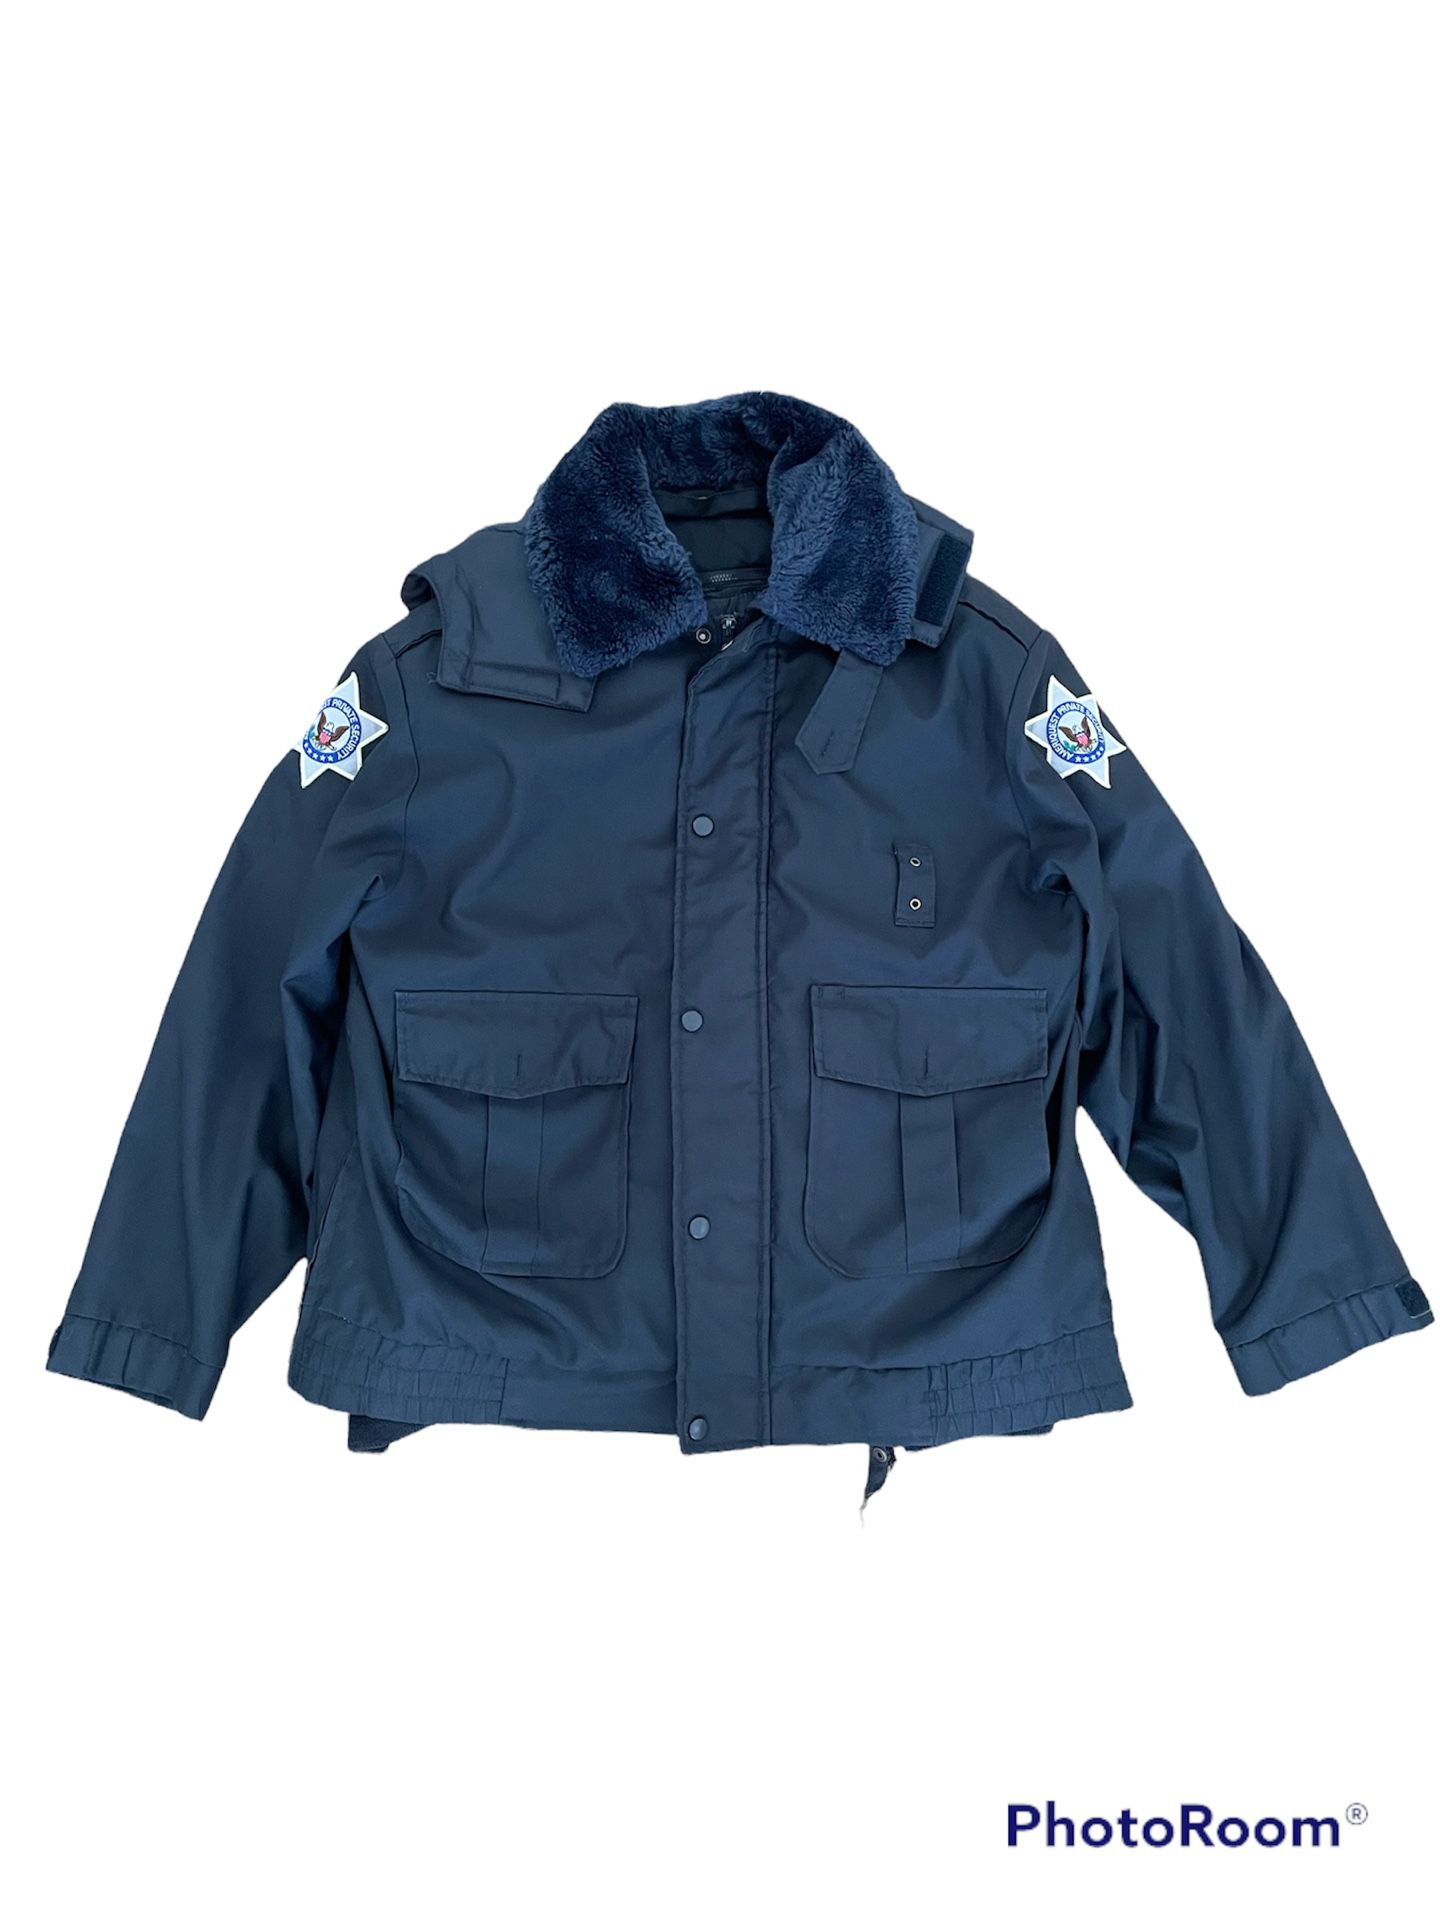 Vintage First Class Black SECURITY Zip Up Size Medium Jacket Waterproof 